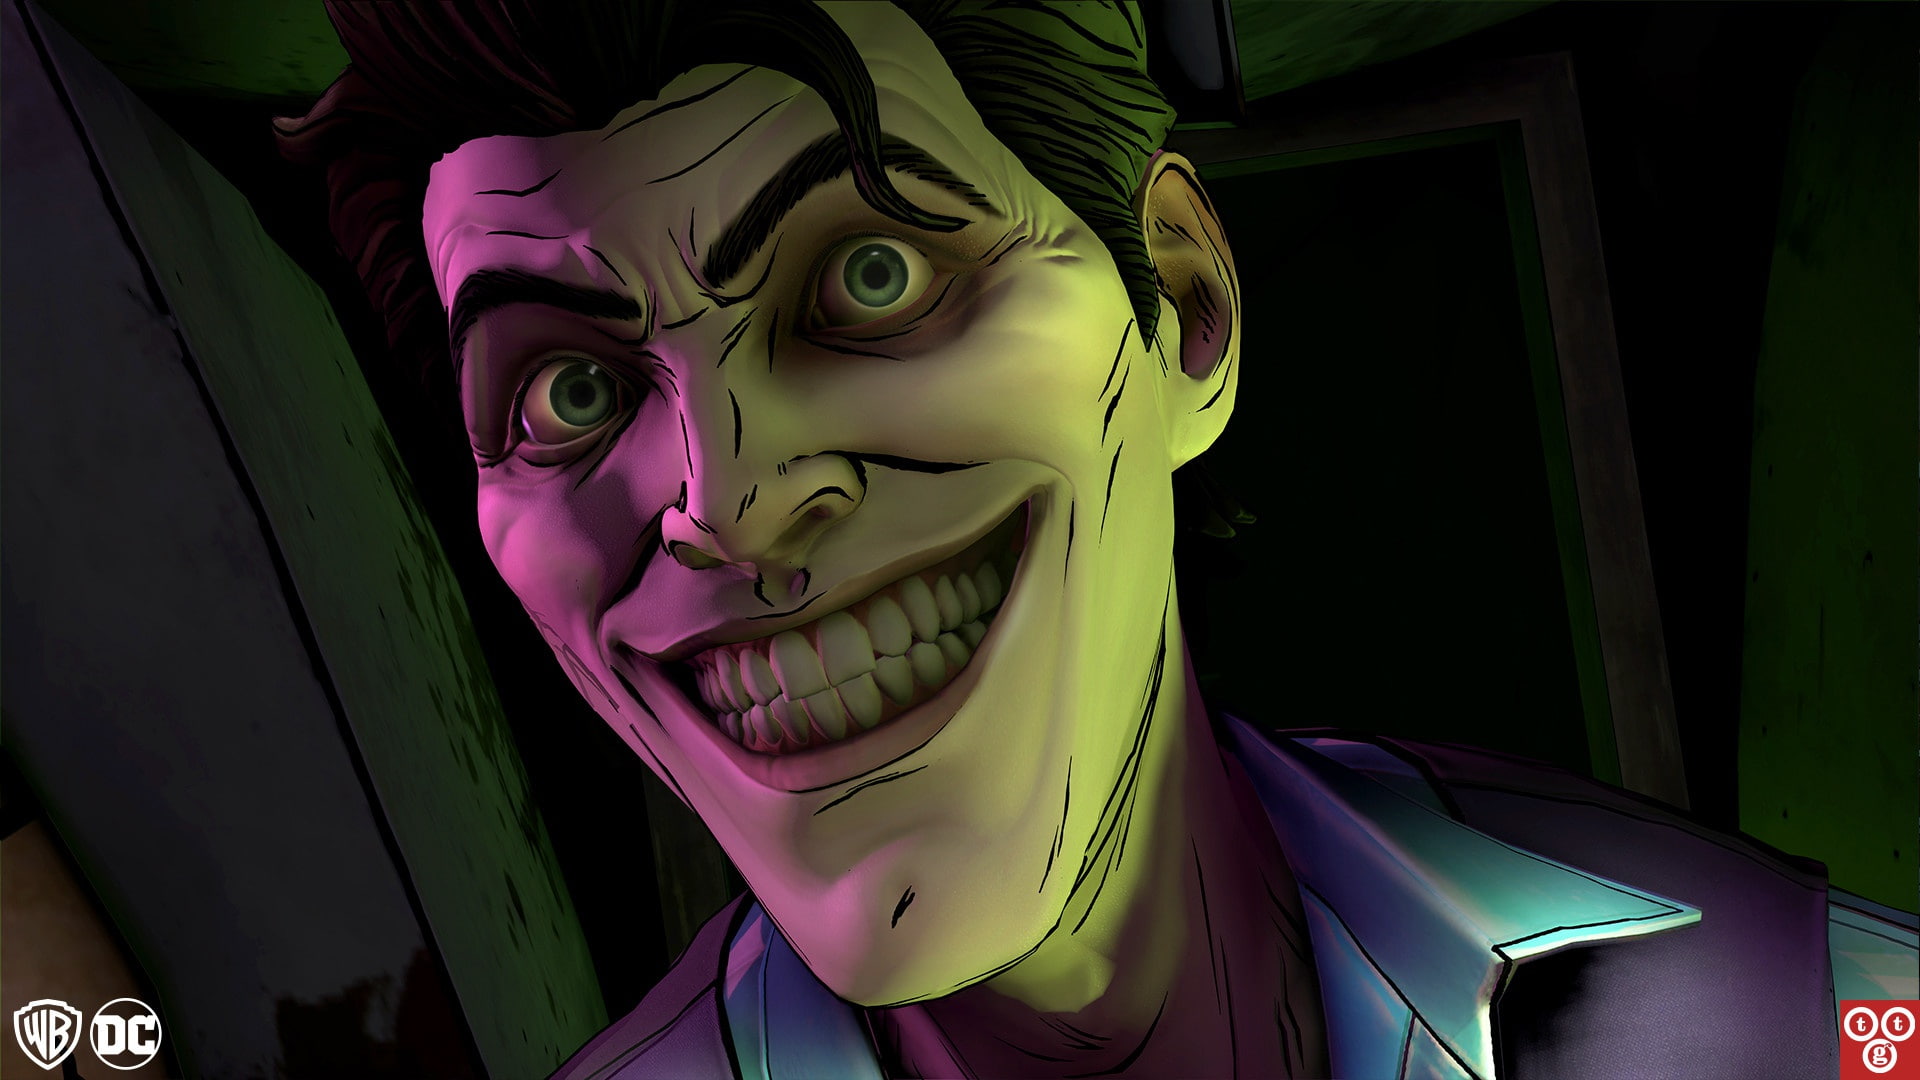 The game, Smile, Joker, Teeth, Eyes, Villain, DC Comics, Telltale Games